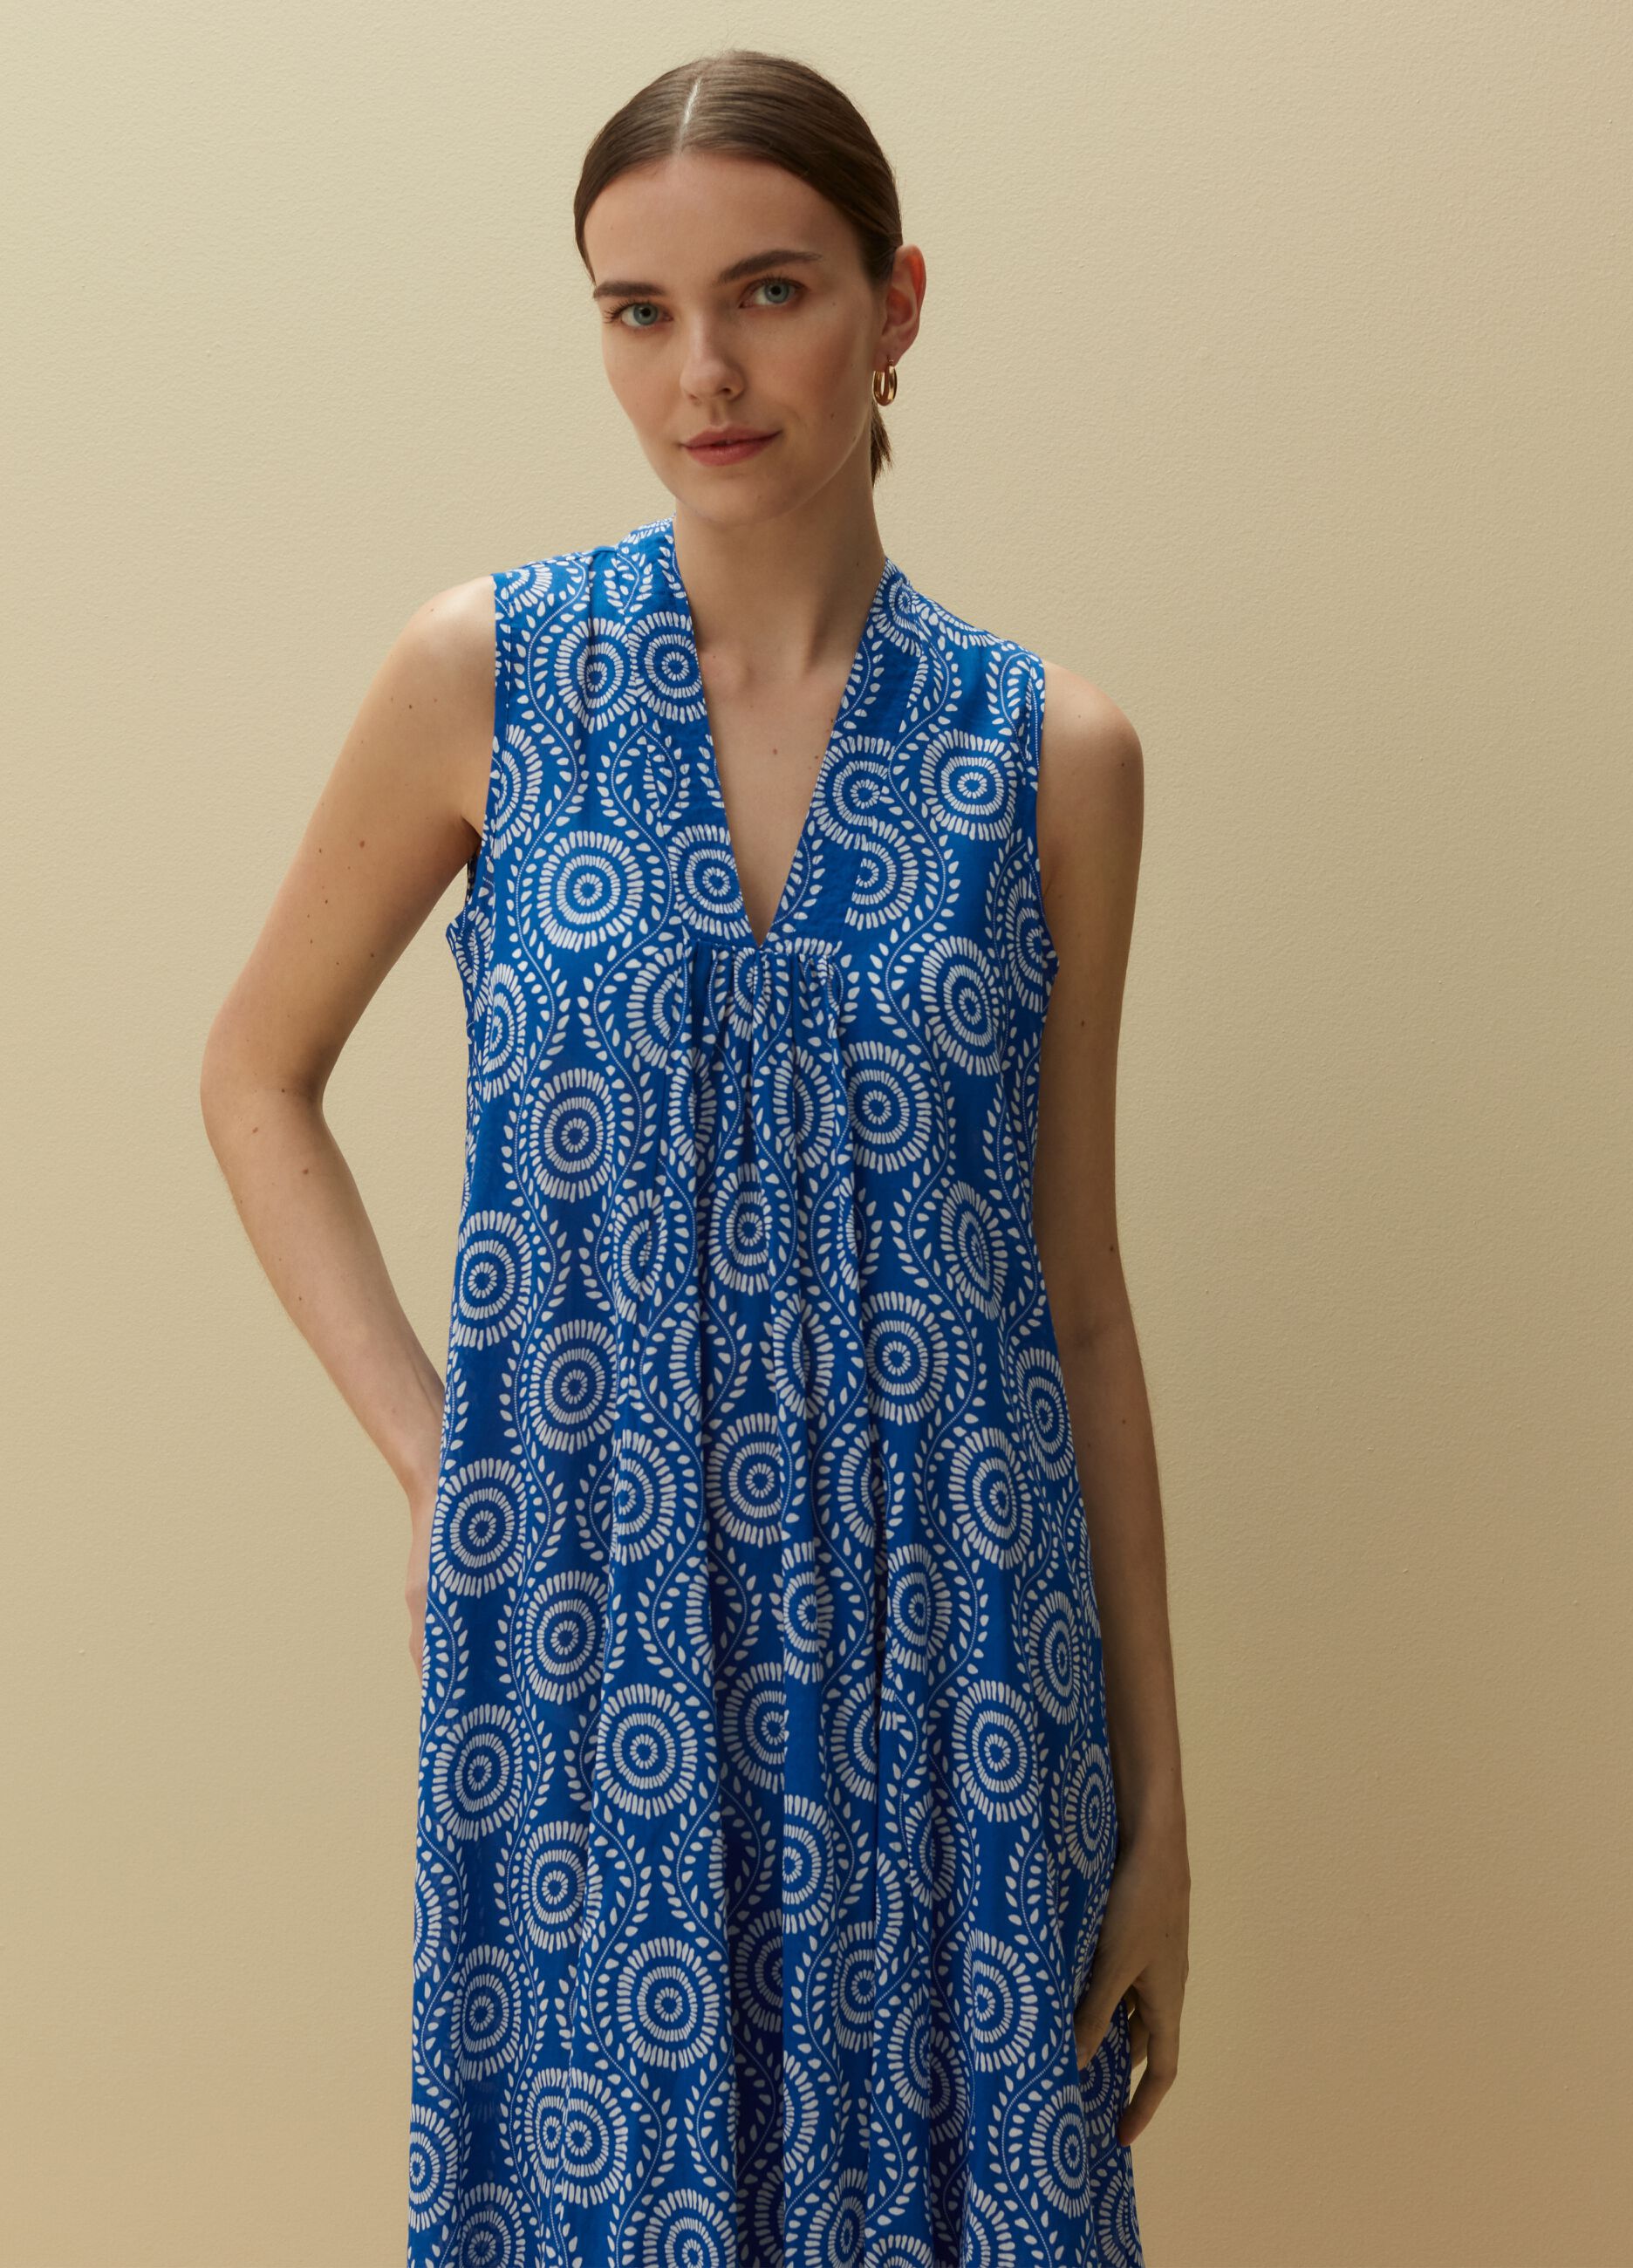 Sleeveless midi dress with all-over print